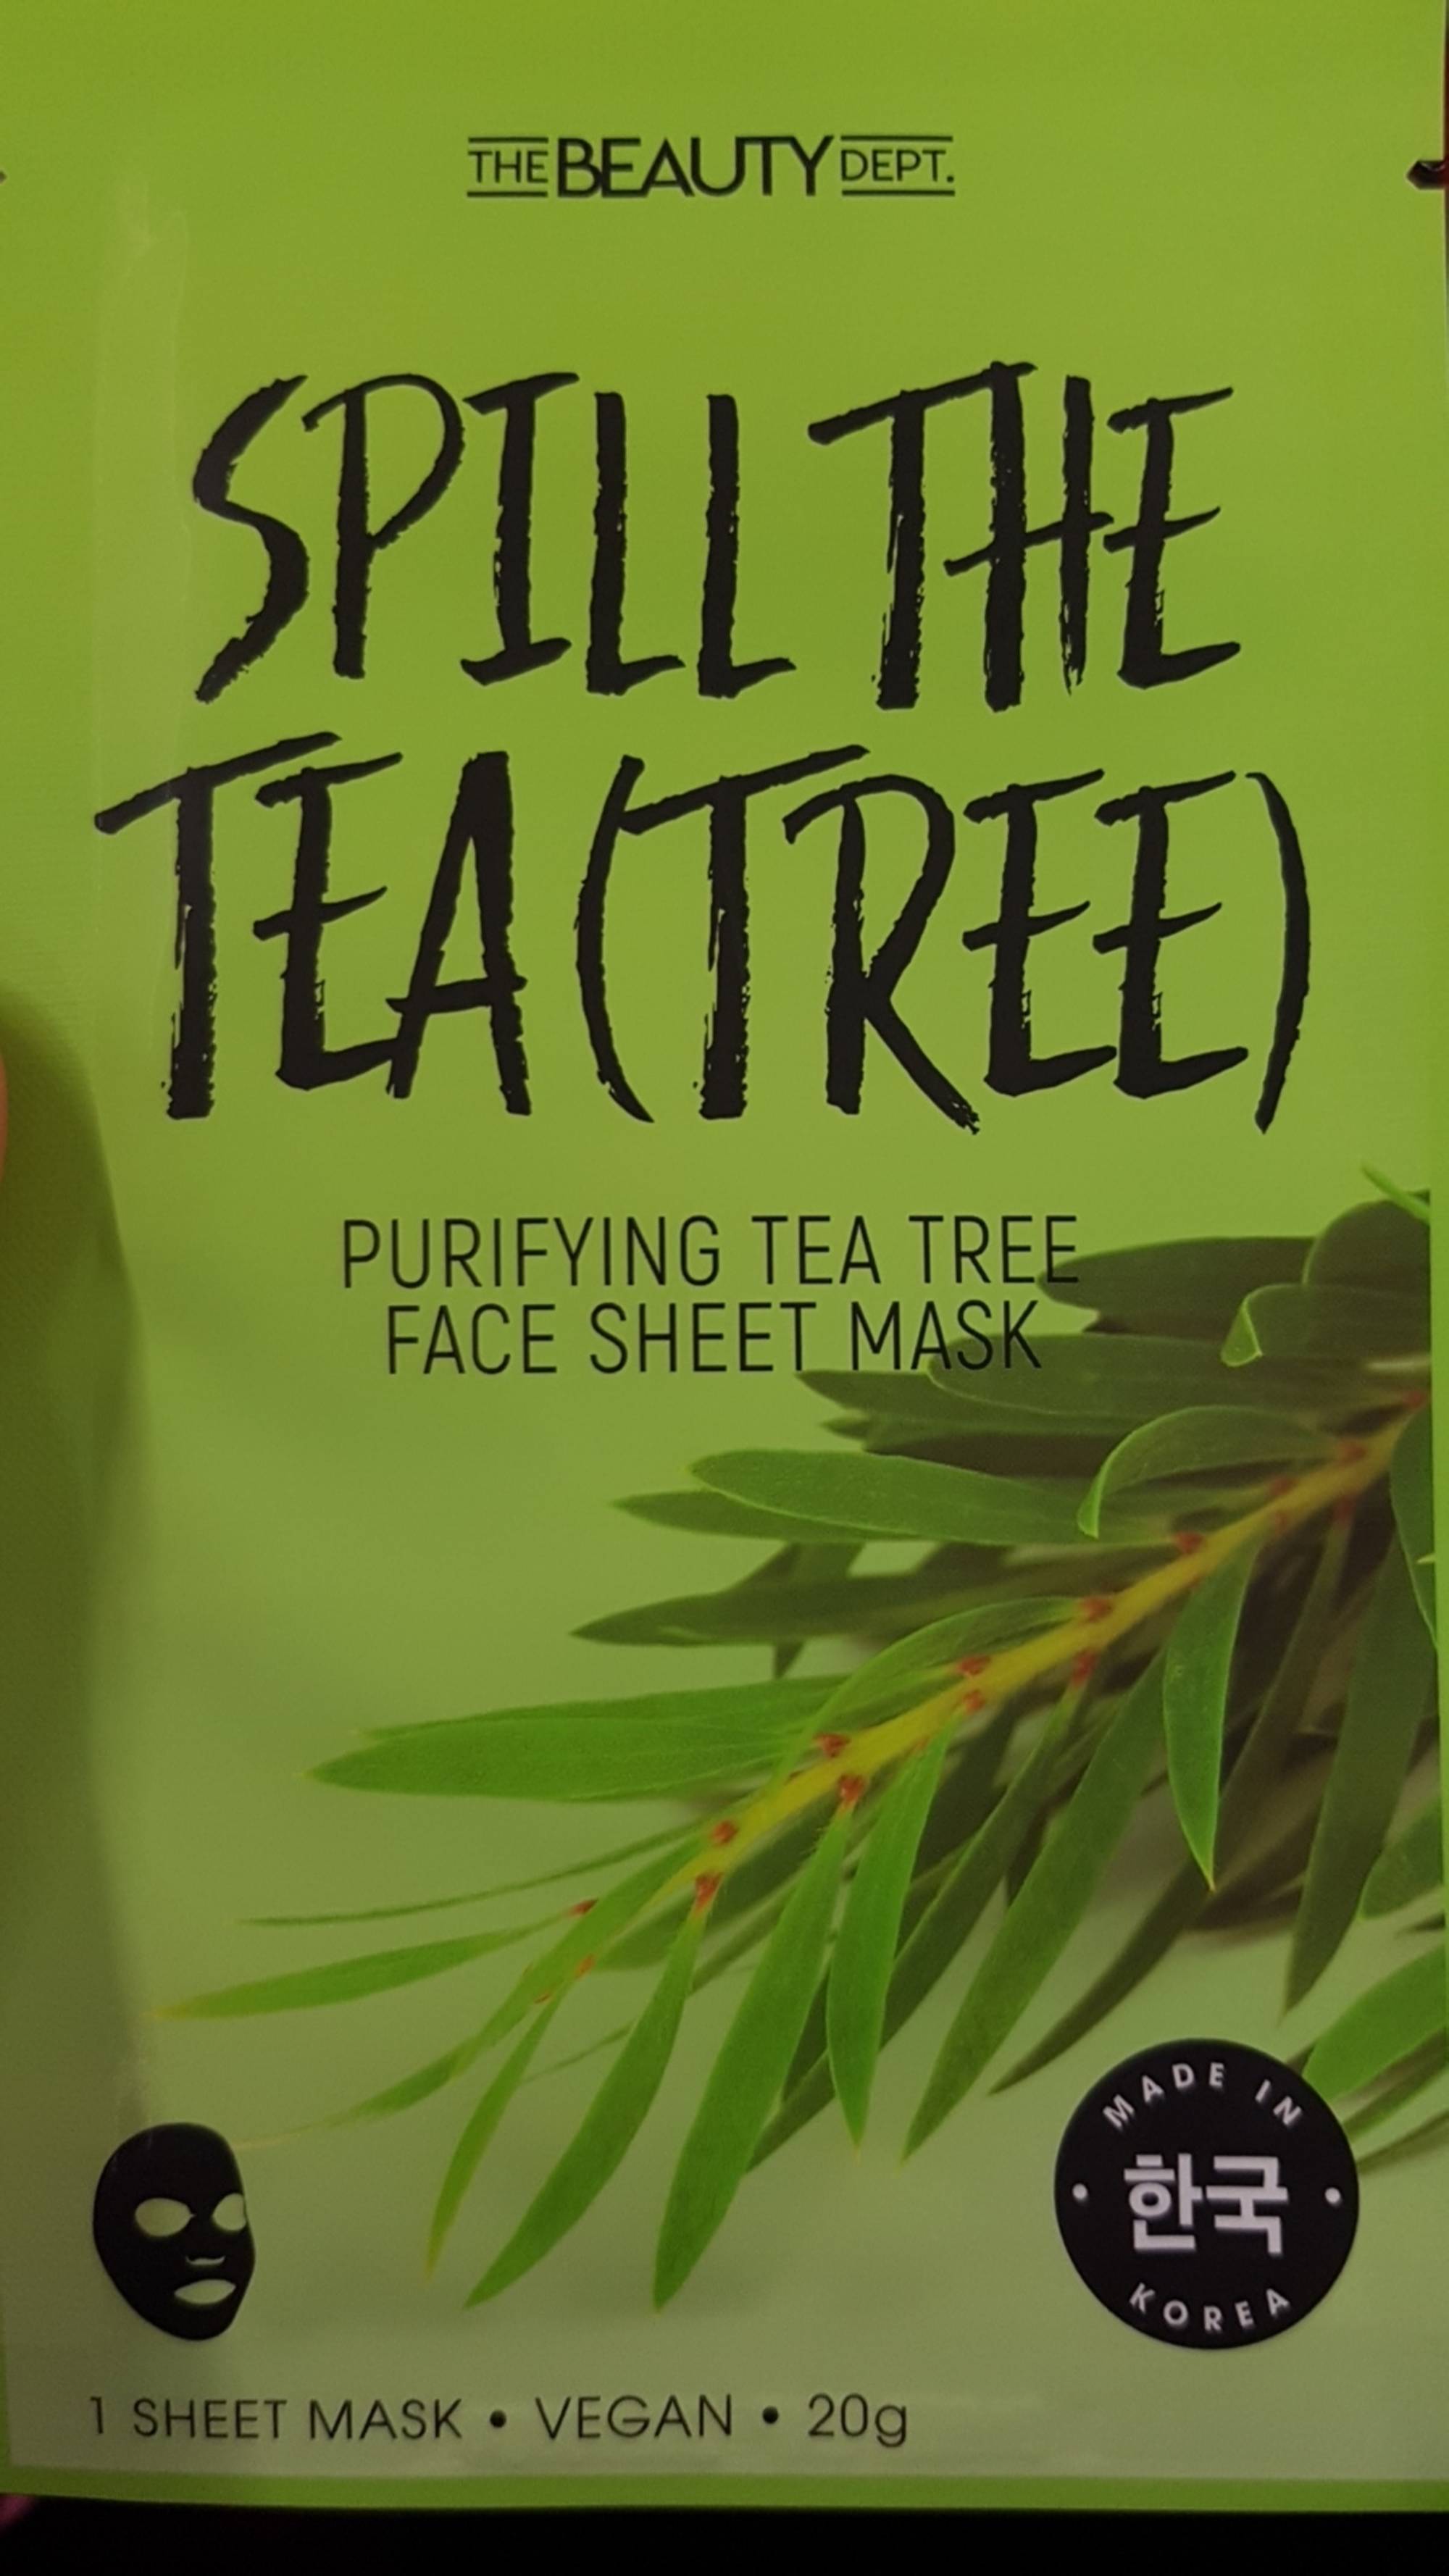 THE BEAUTY DEPT - Spill the tea (tree) - Face sheet mask